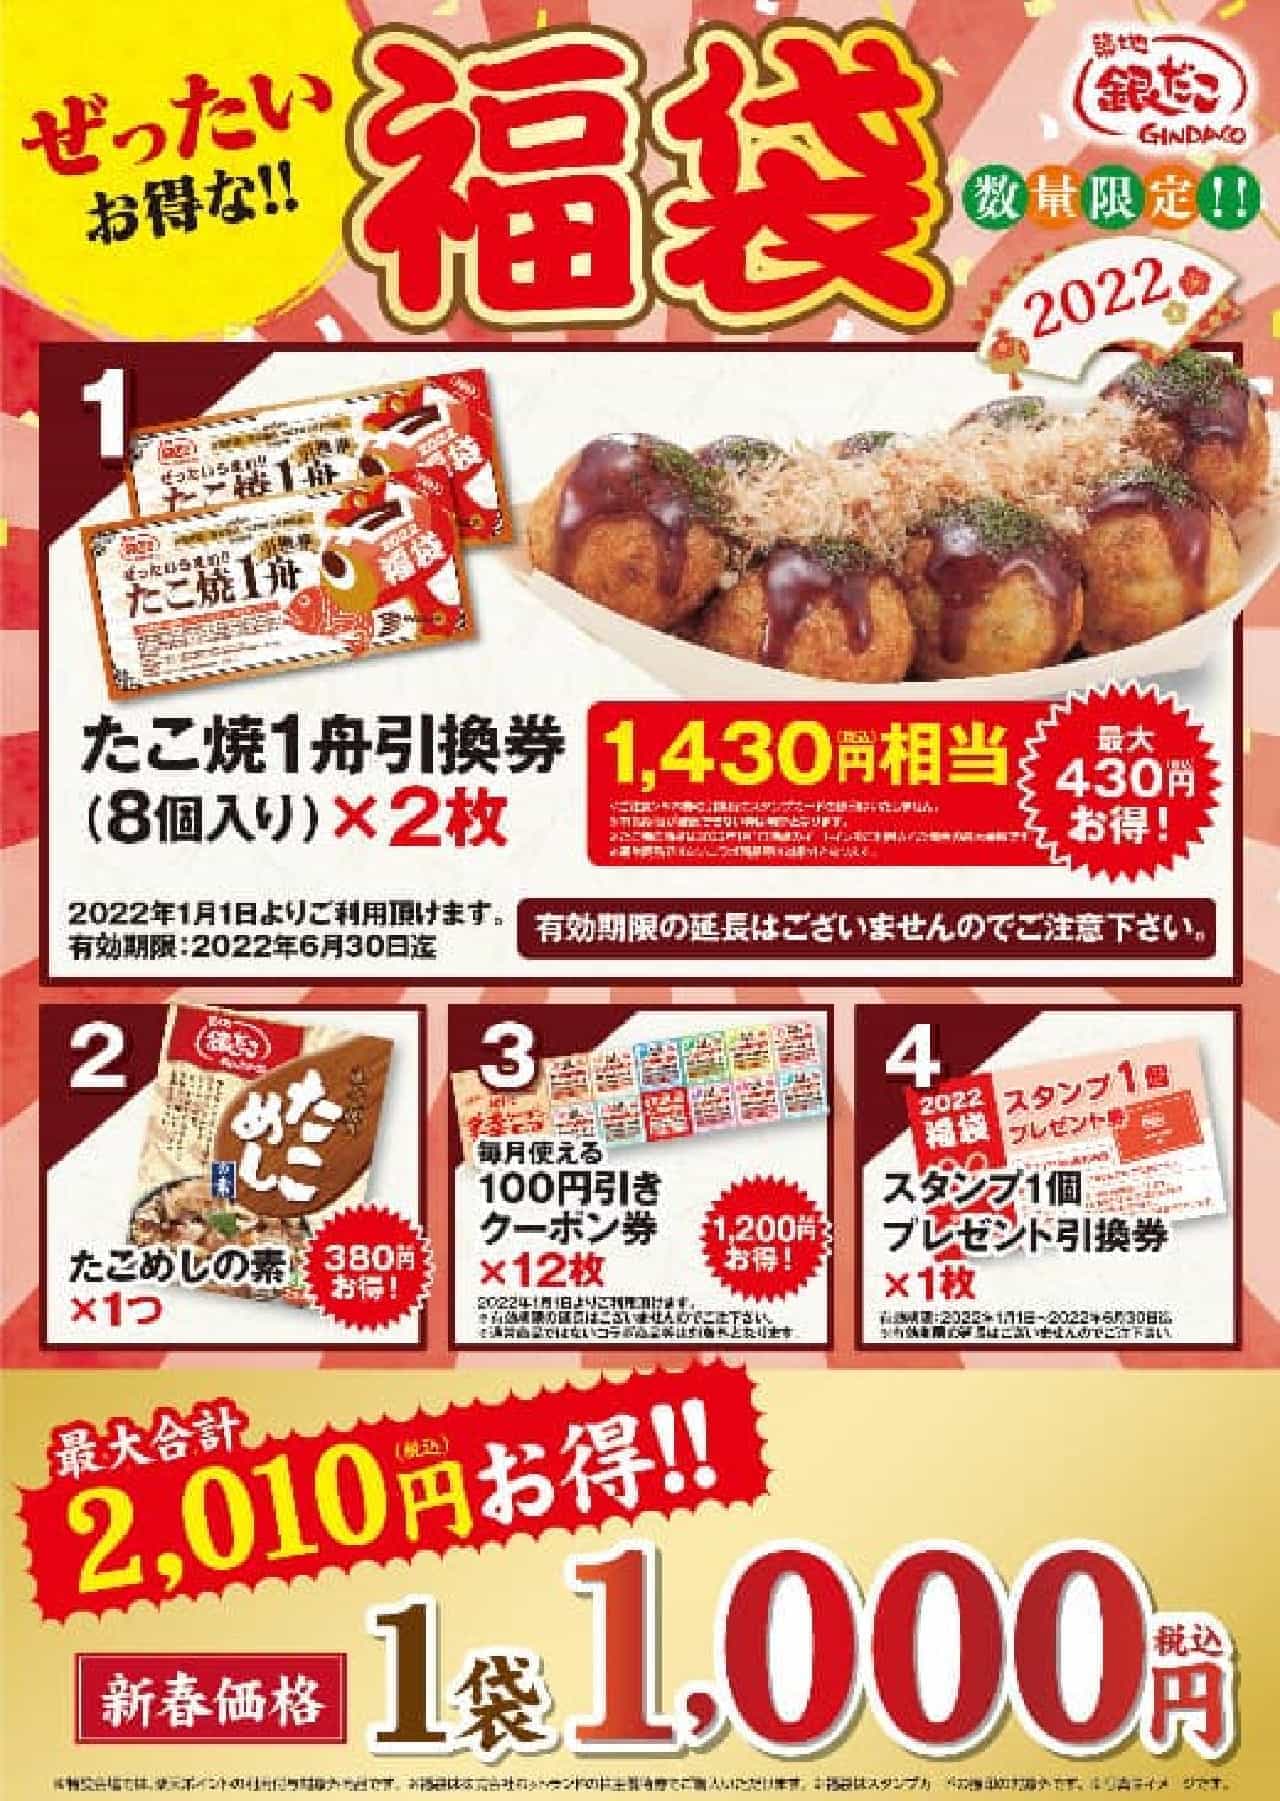 Gindaco Tsukiji "Great deals !! Lucky bag" "Anyway great deals !! Lucky bags" "Most great deals !! Lucky bags"